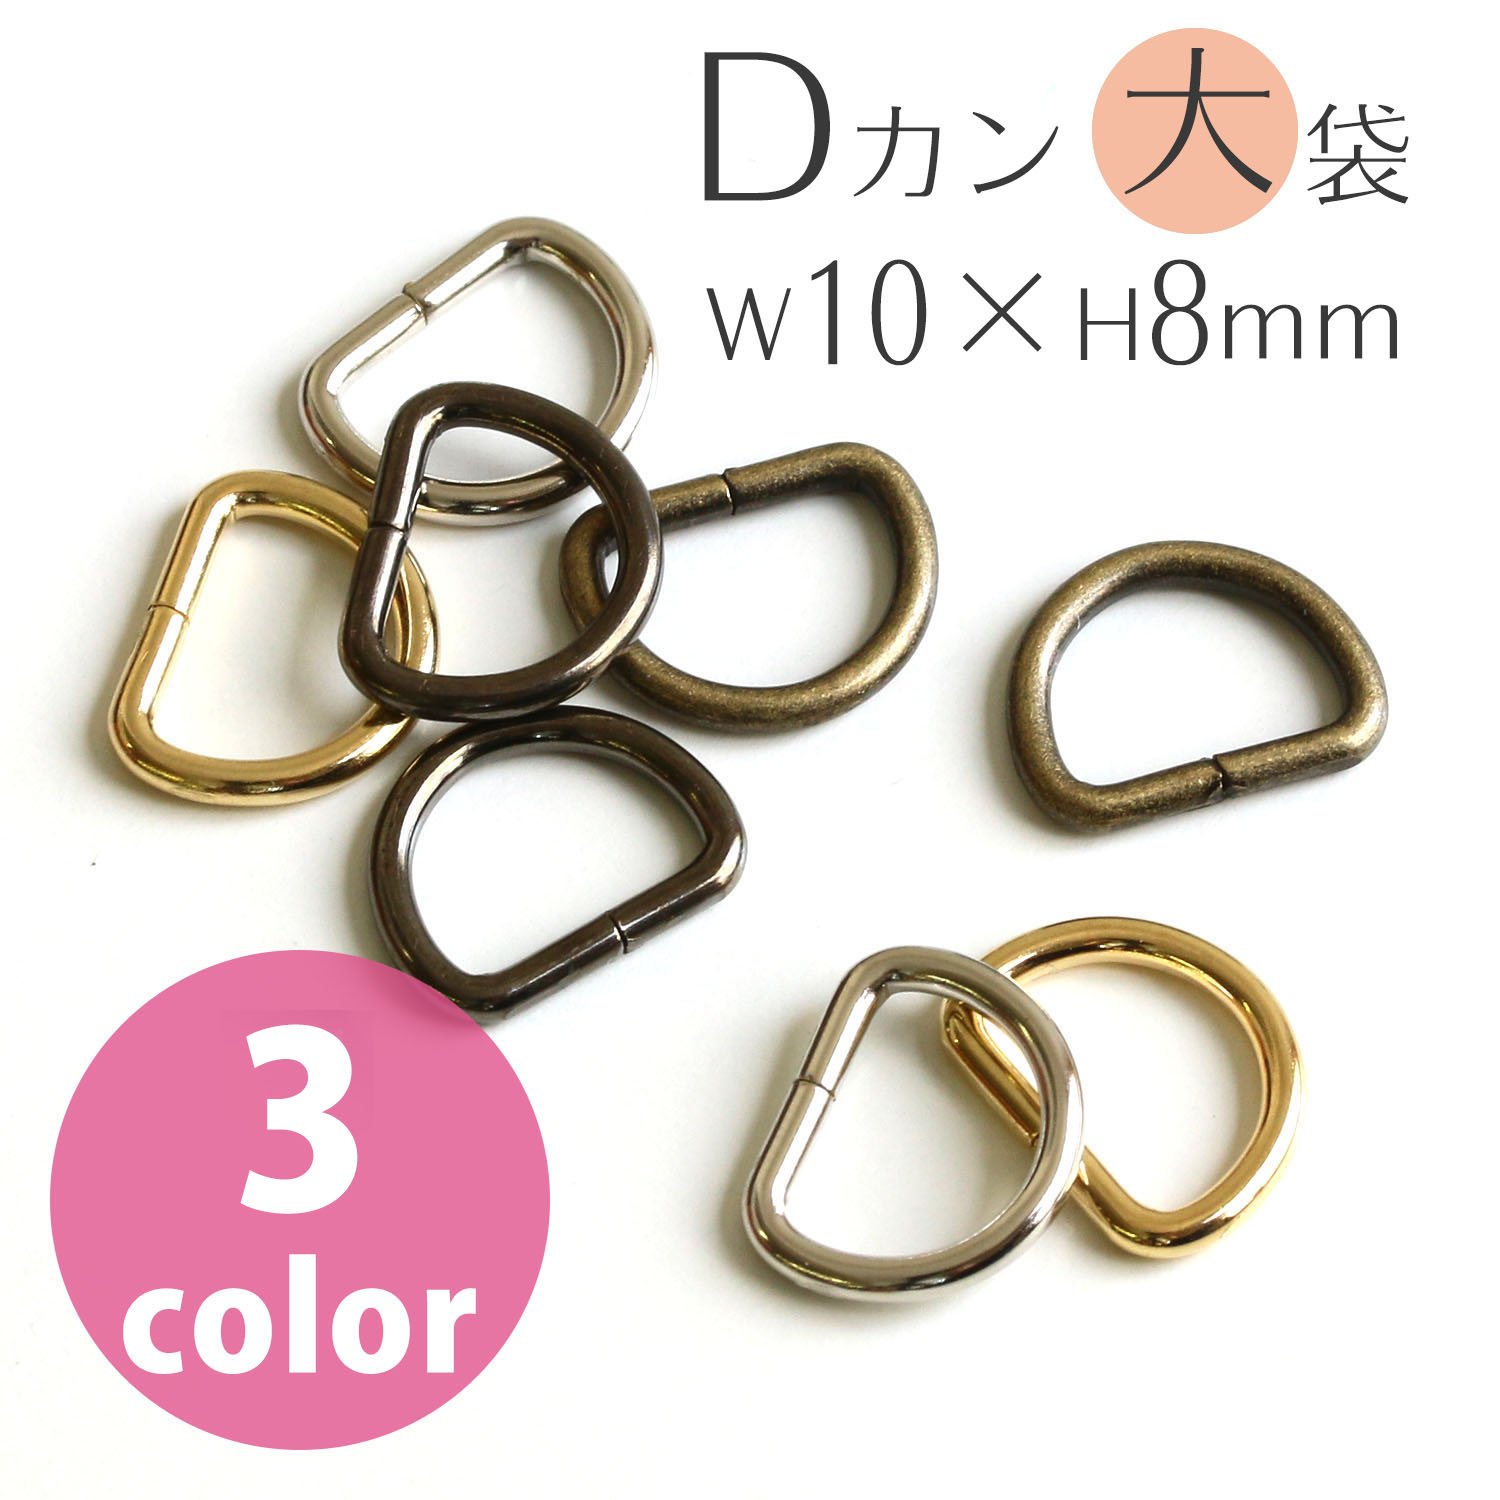 S22 D-Ring  10 x 8mm"", diameter 1.8mm 120pcs (bag)